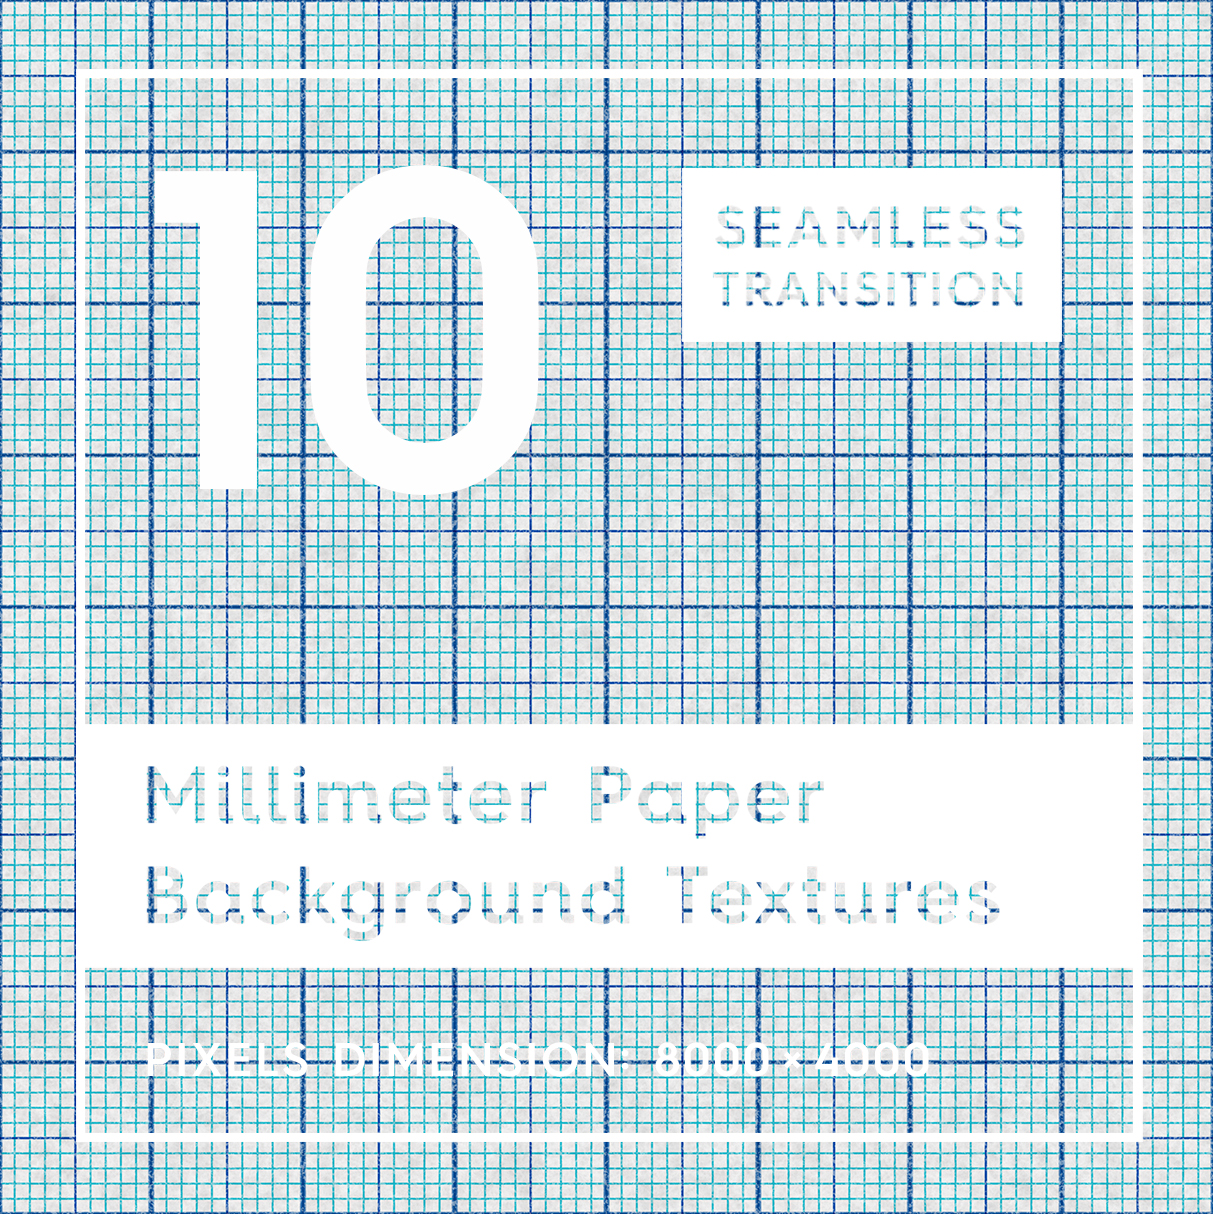 10 Millimeter Paper Textures